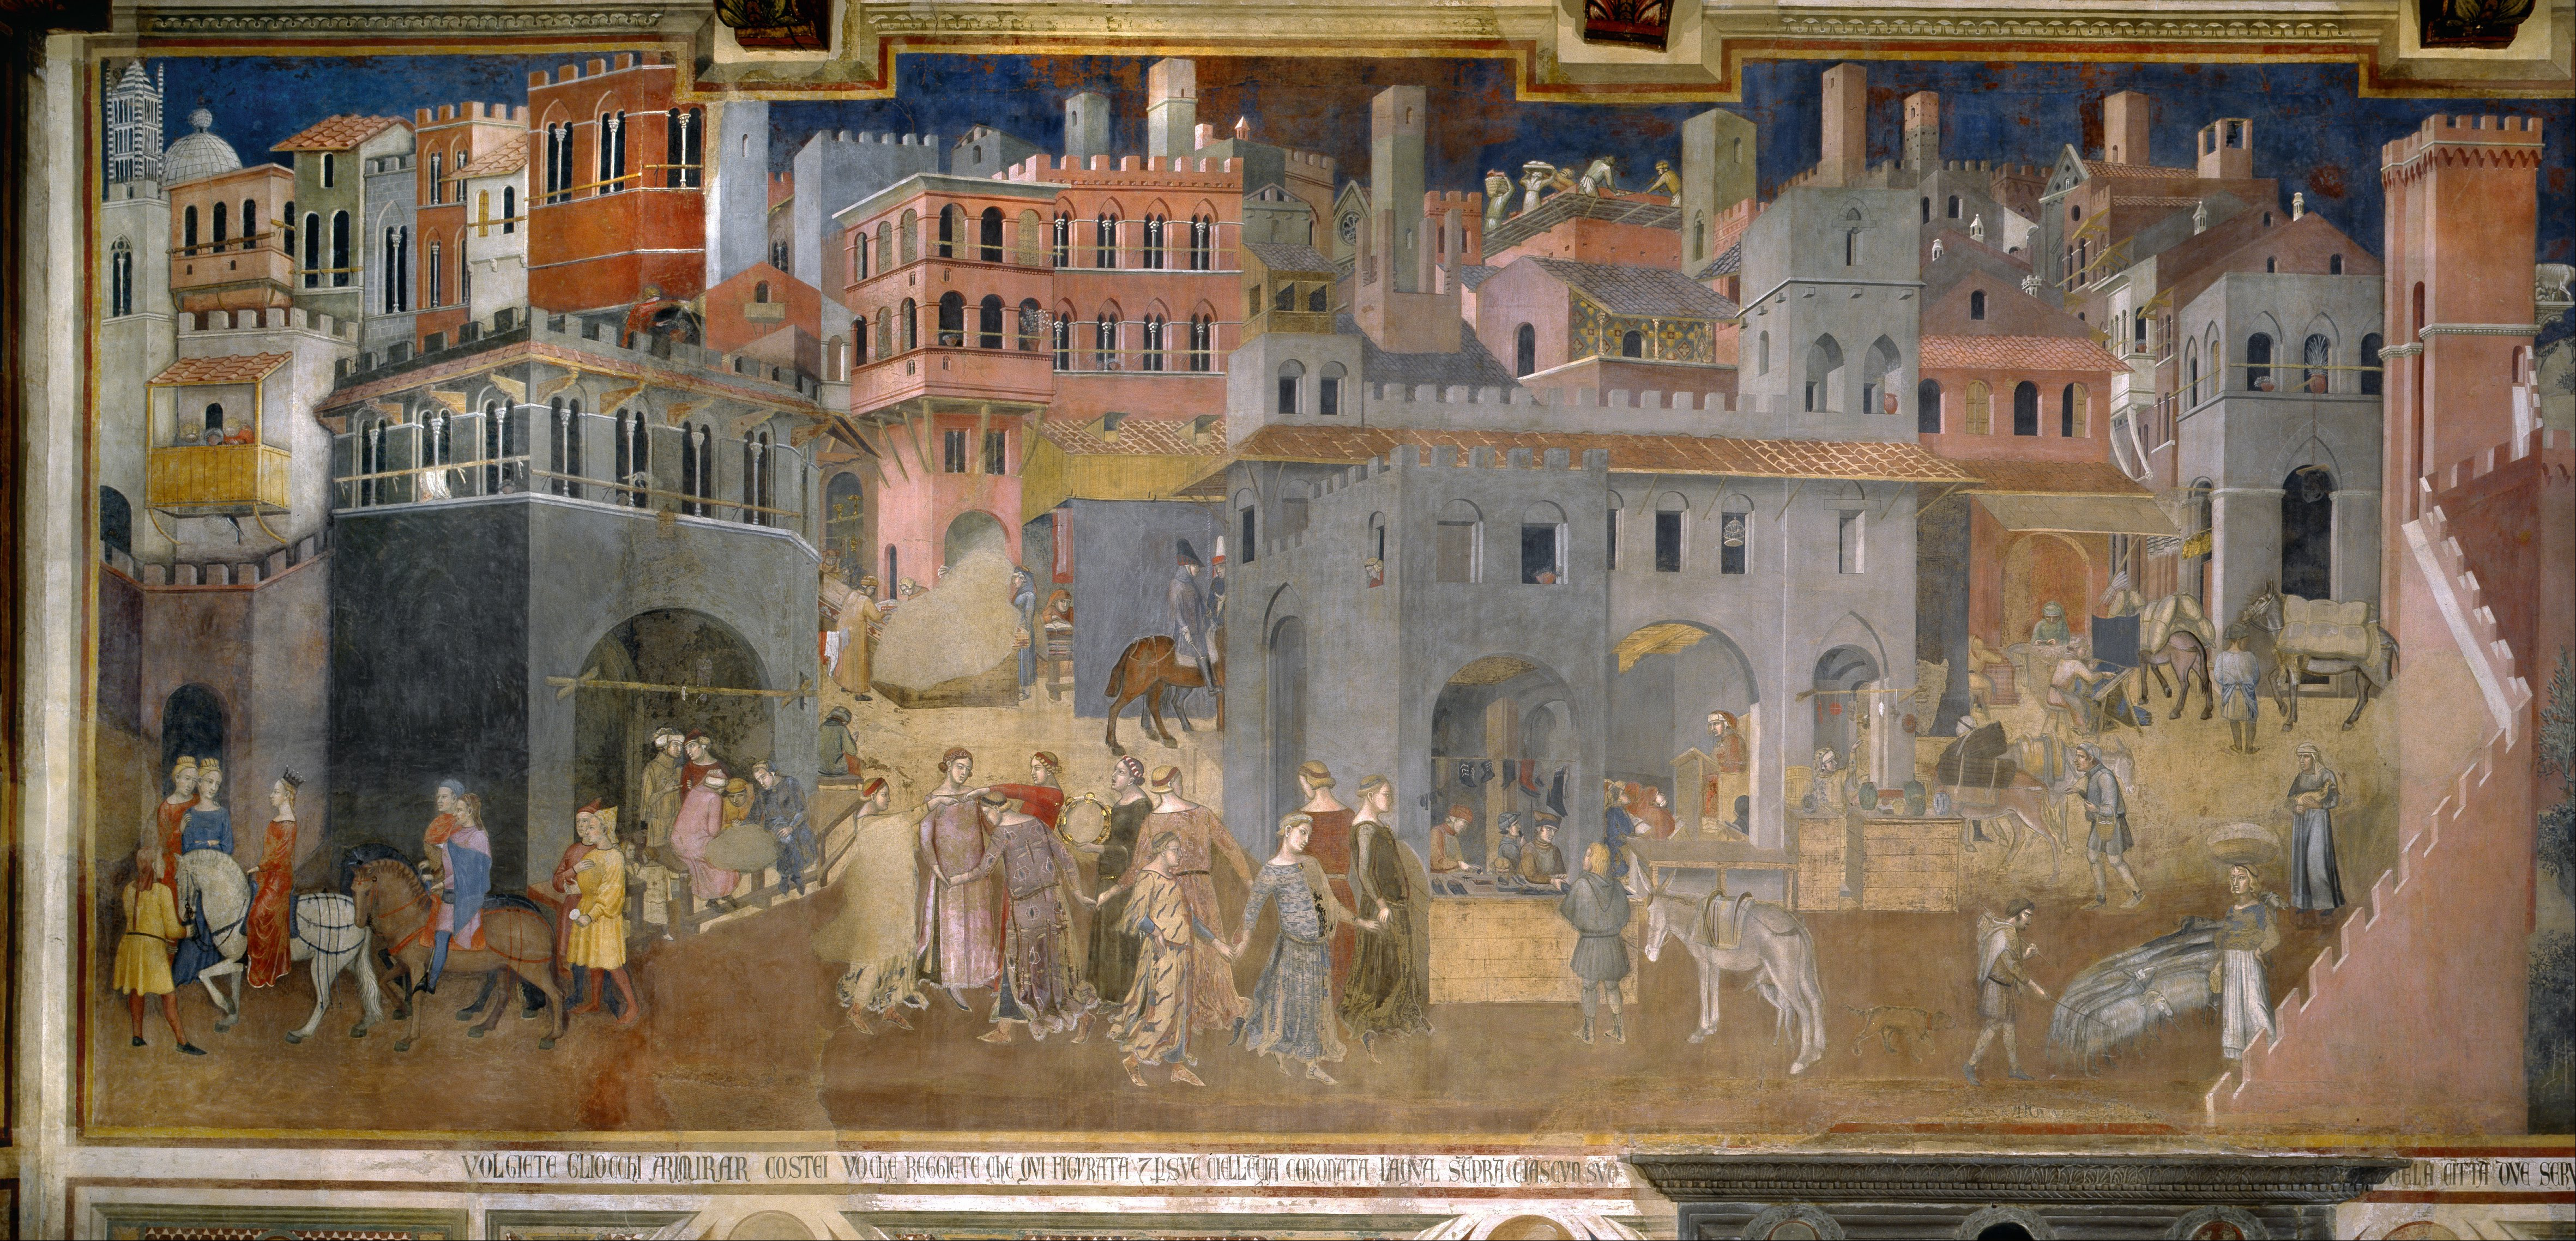 Medieval Siena depicted on the fresco by Ambrogio Lorenzetti